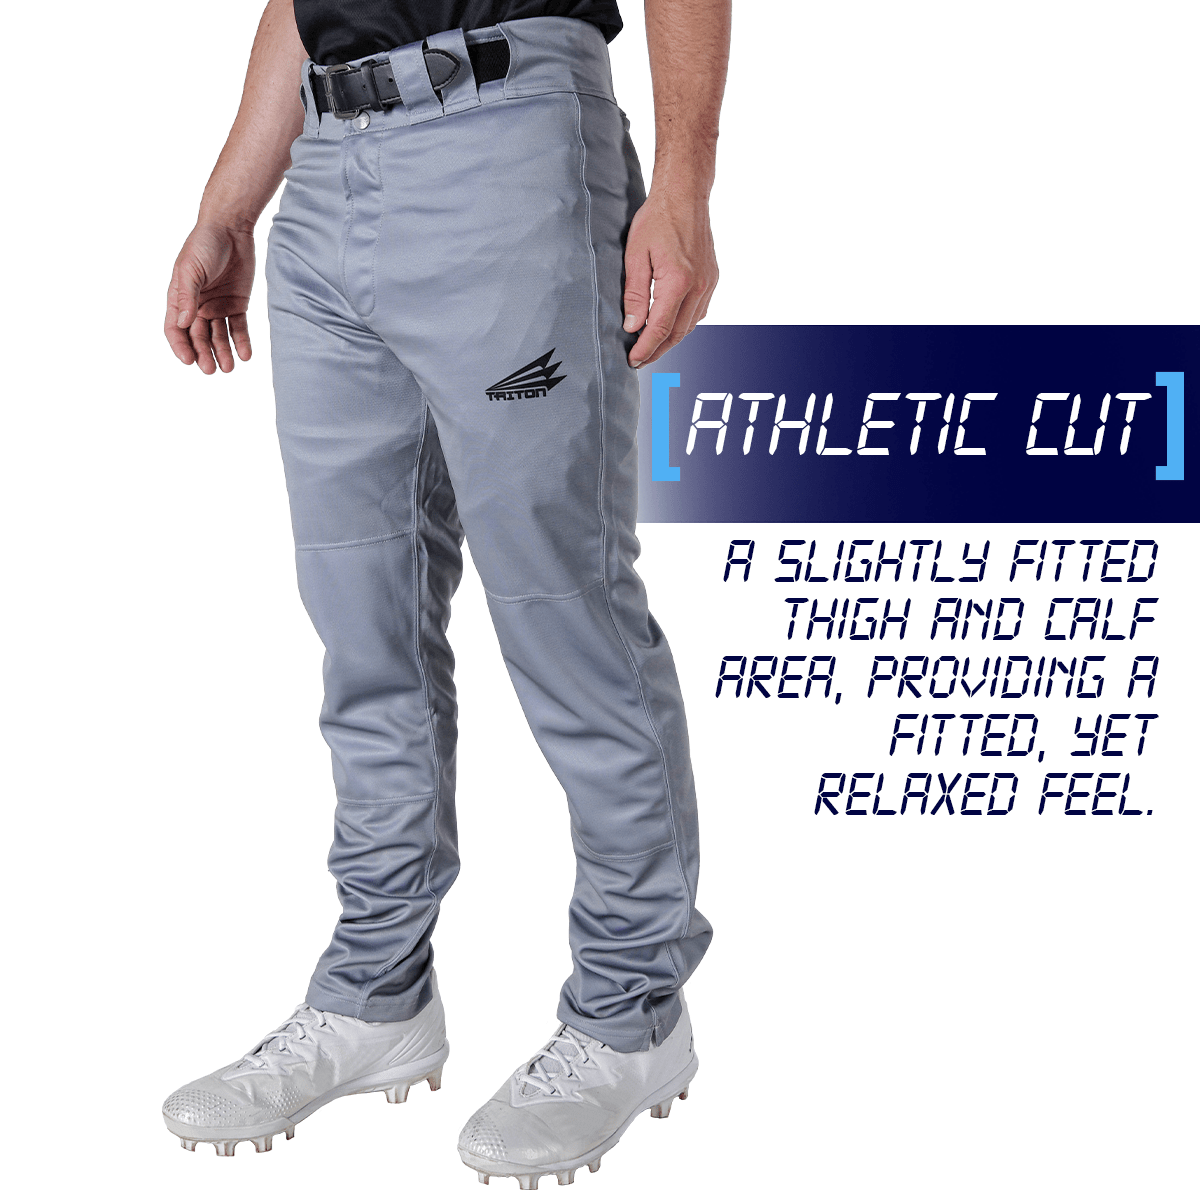 Triton Elite Athletic Cut Tapered Baseball Pant (Gray)